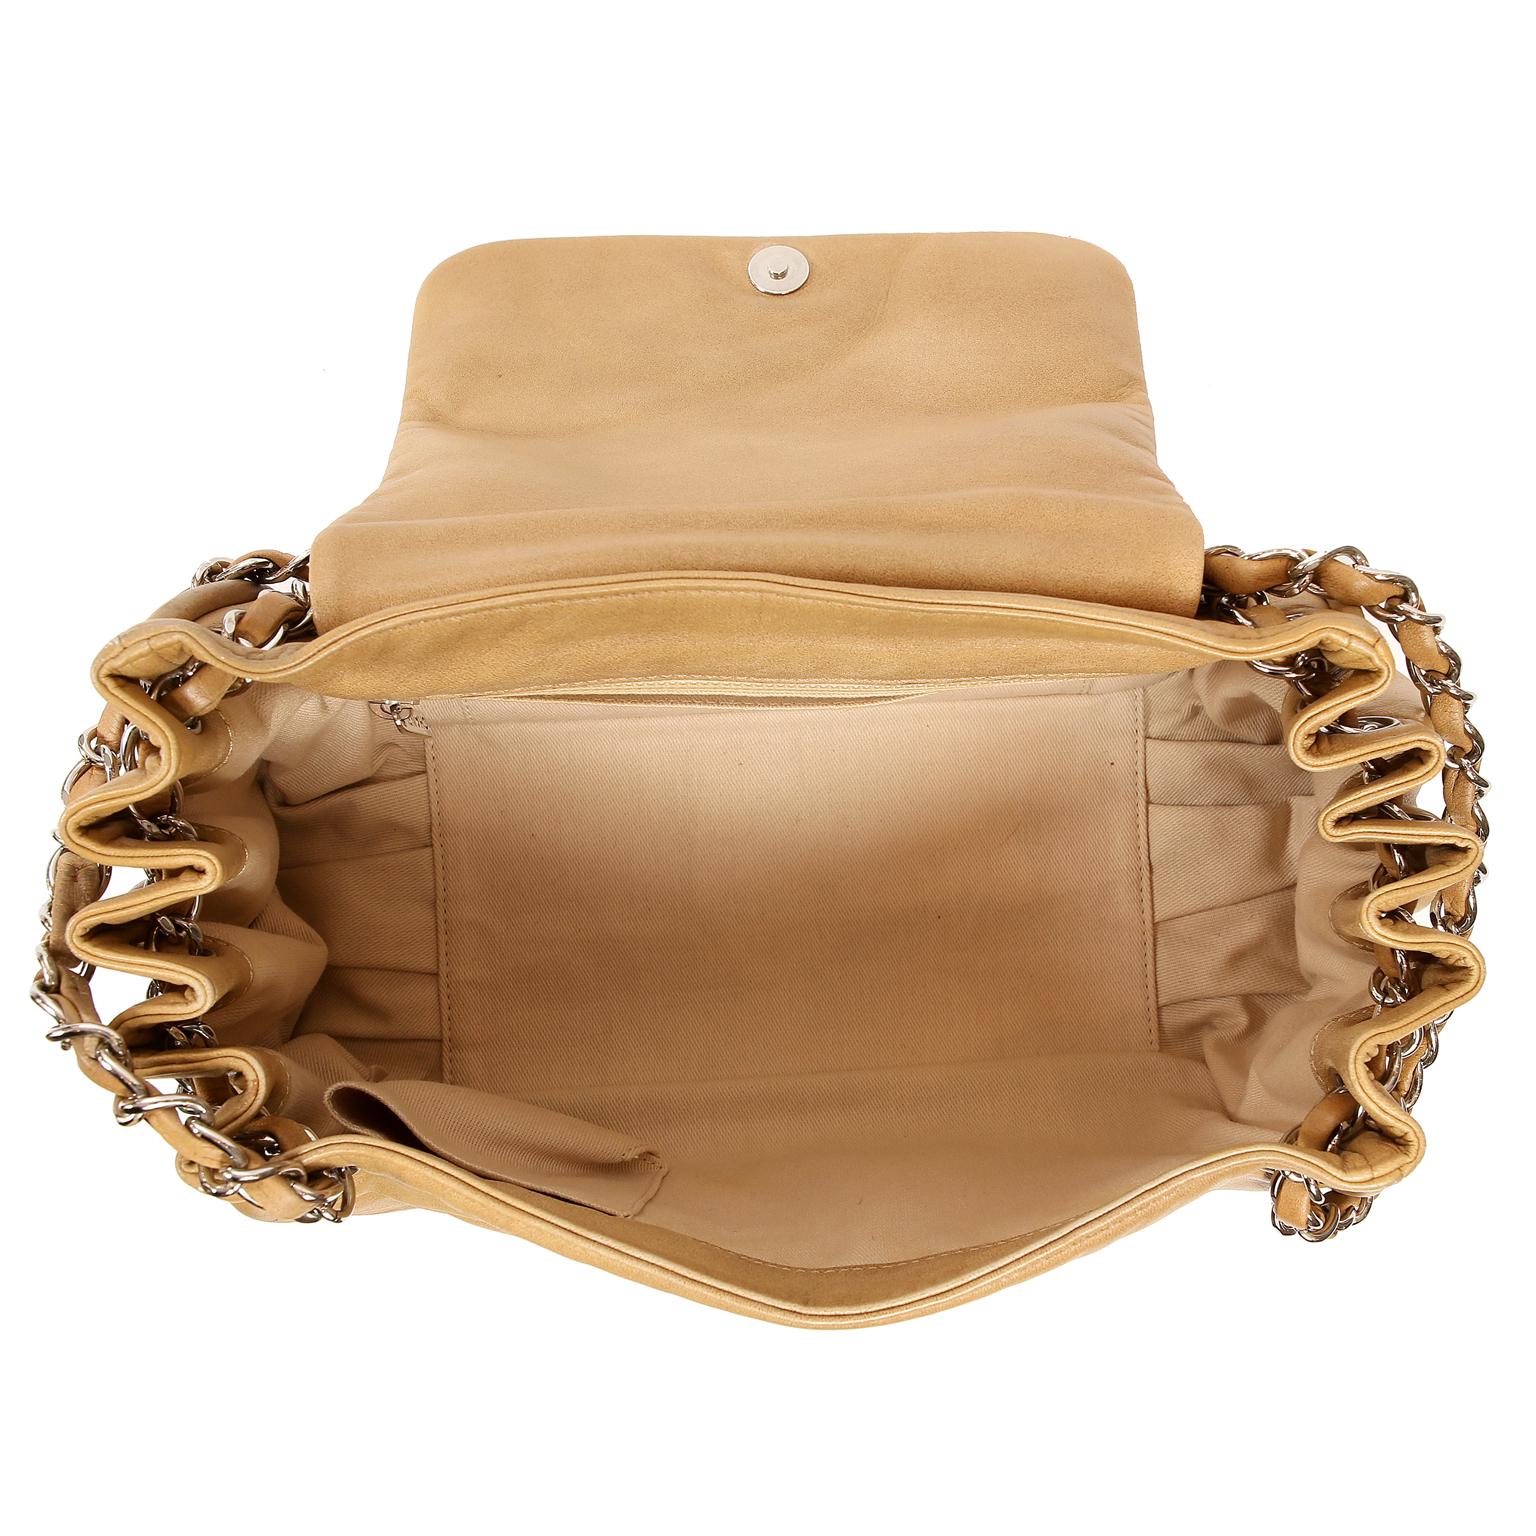 Chanel Beige Leather Accordion Flap Bag 8